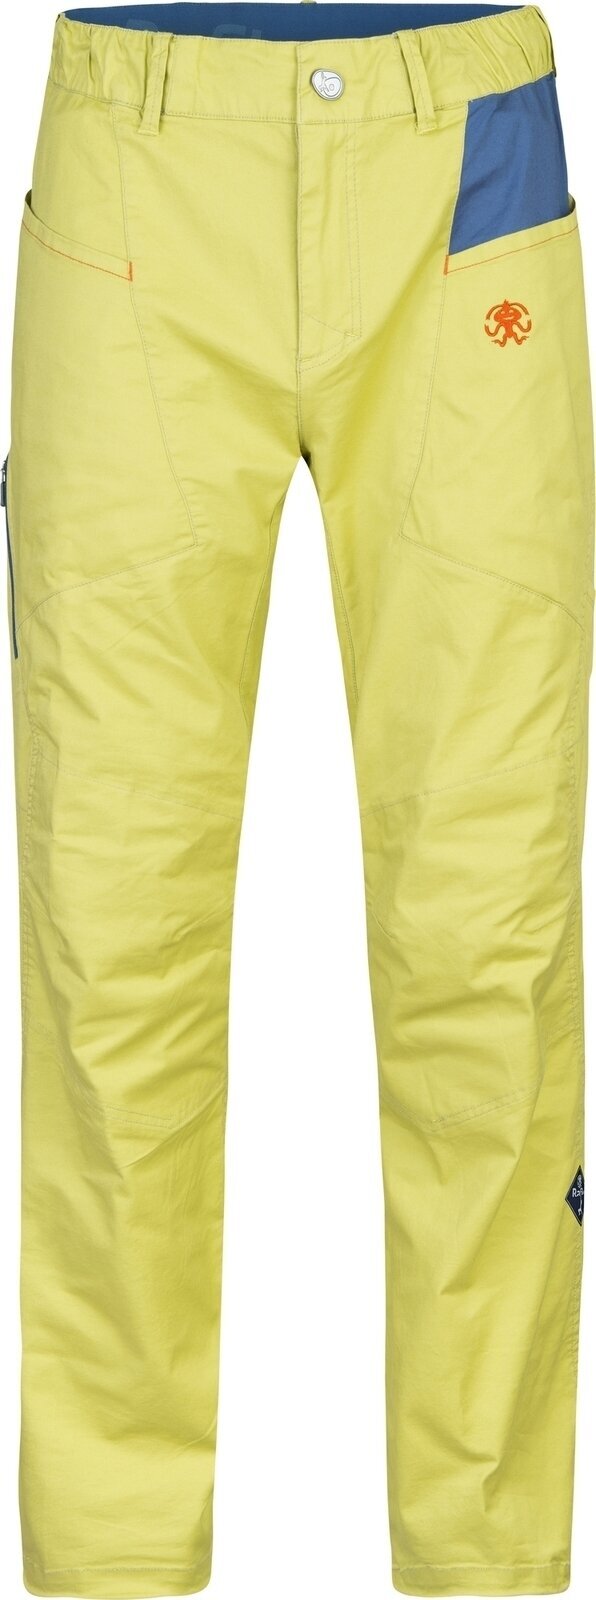 Outdoor Pants Rafiki Crag Man Pants Cress Green/Ensign L Outdoor Pants